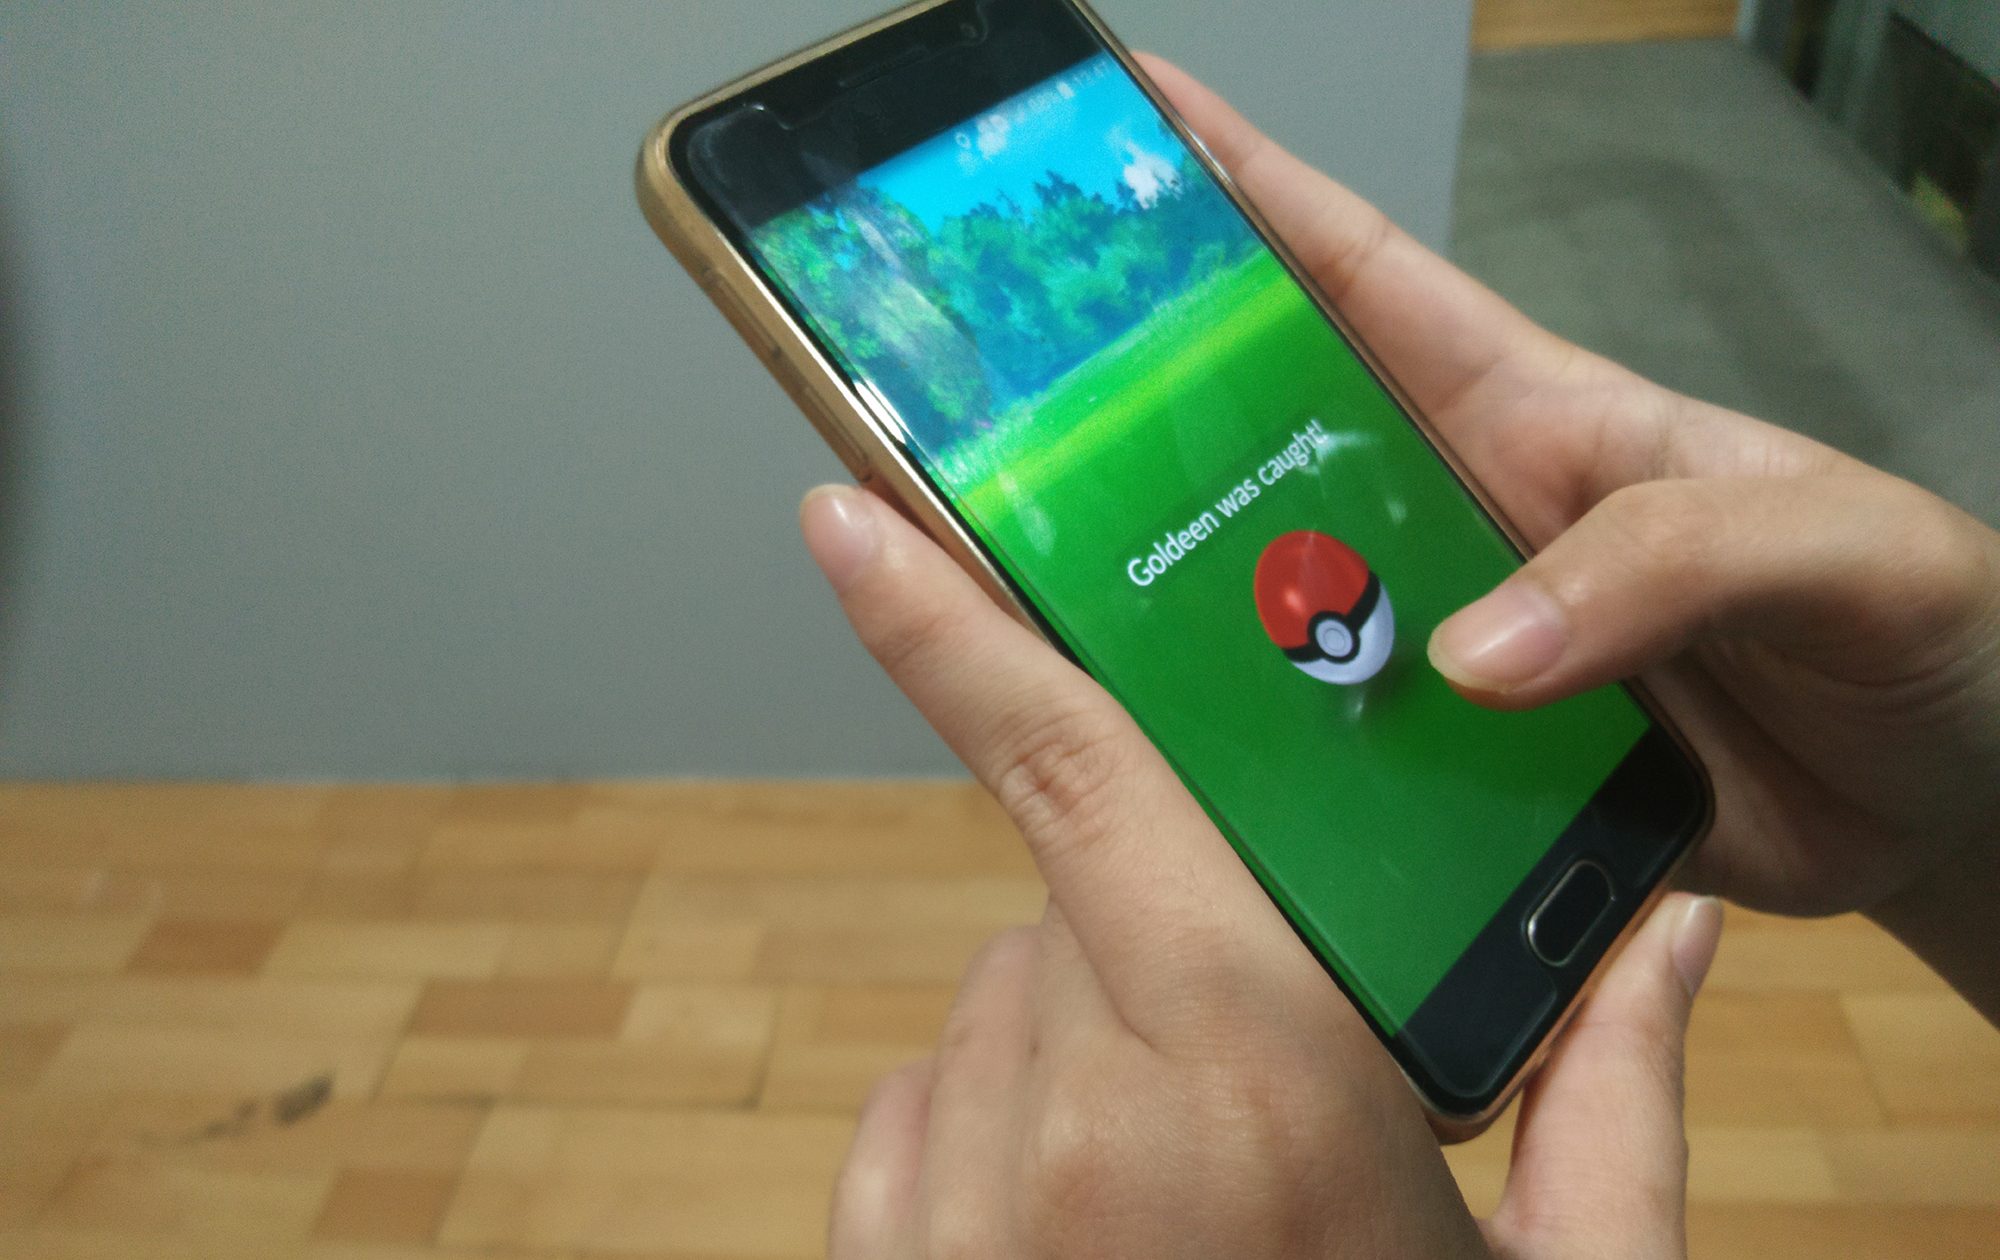 Pokemon Go, batu loncatan bagi teknologi Augmented Reality